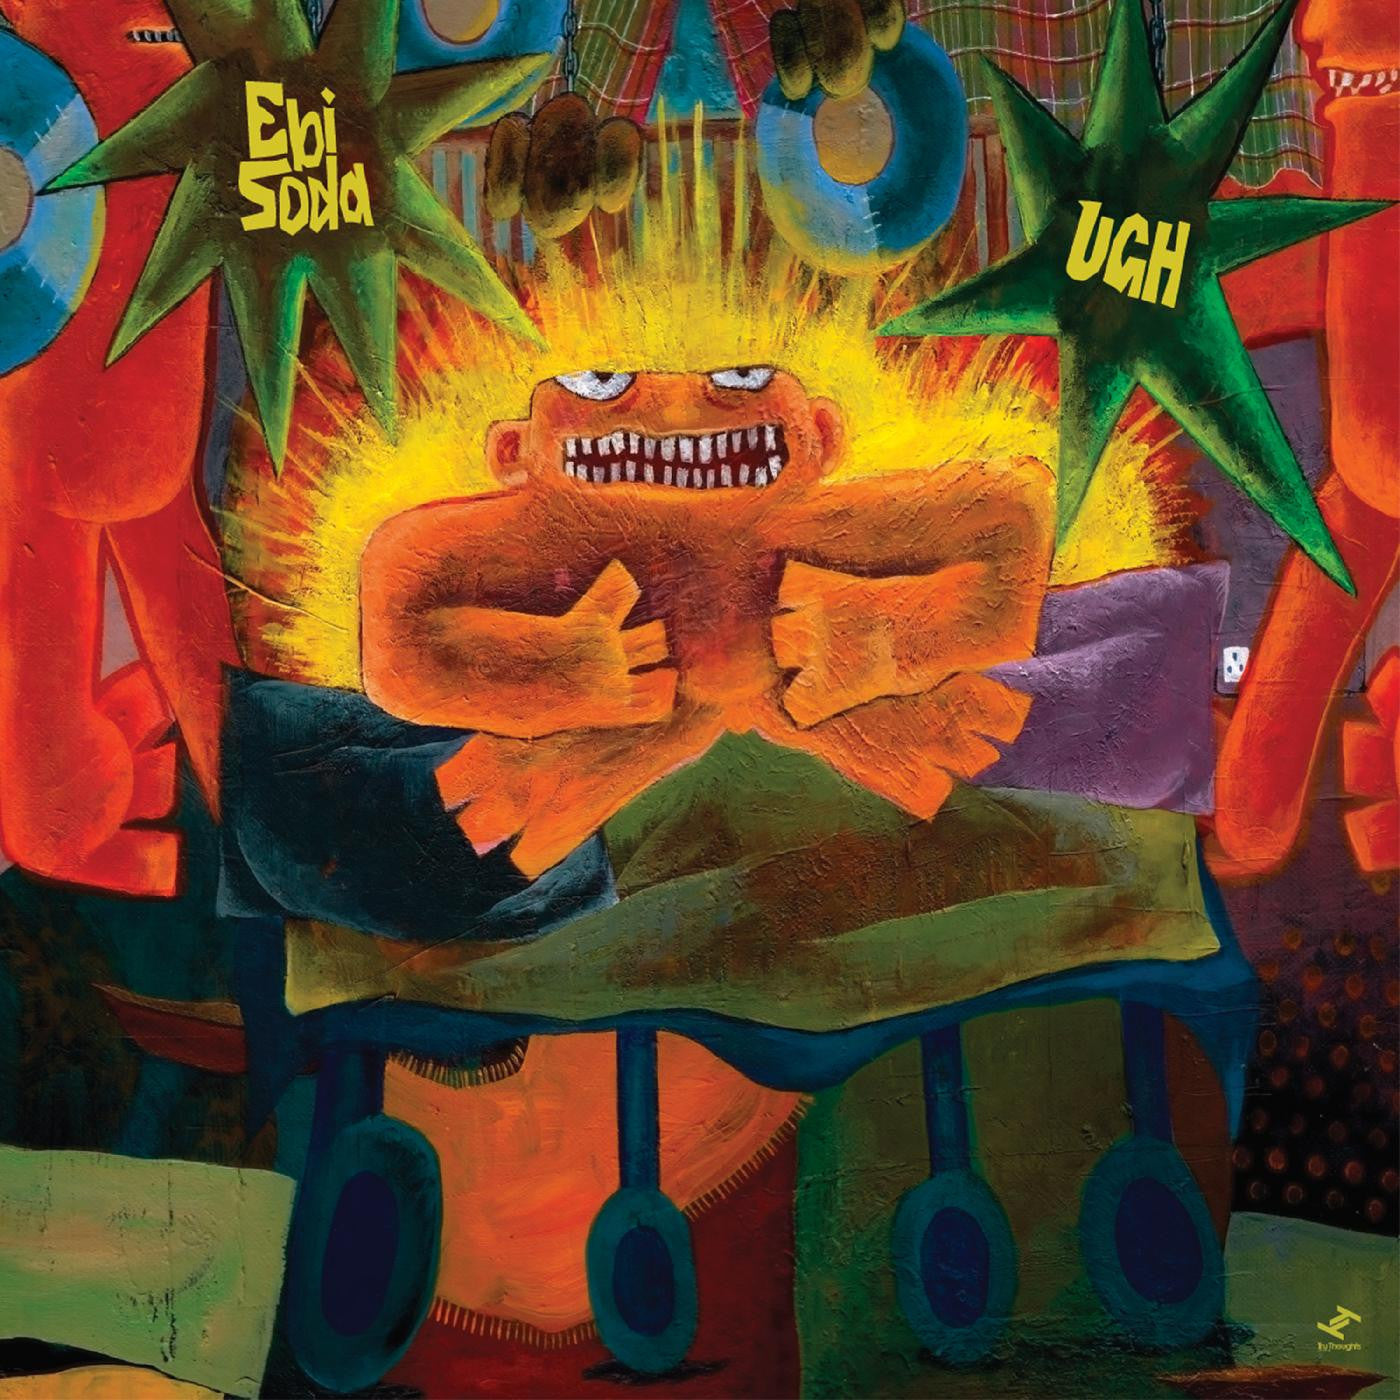 Ebi Soda - Ugh [Yellow Vinyl]